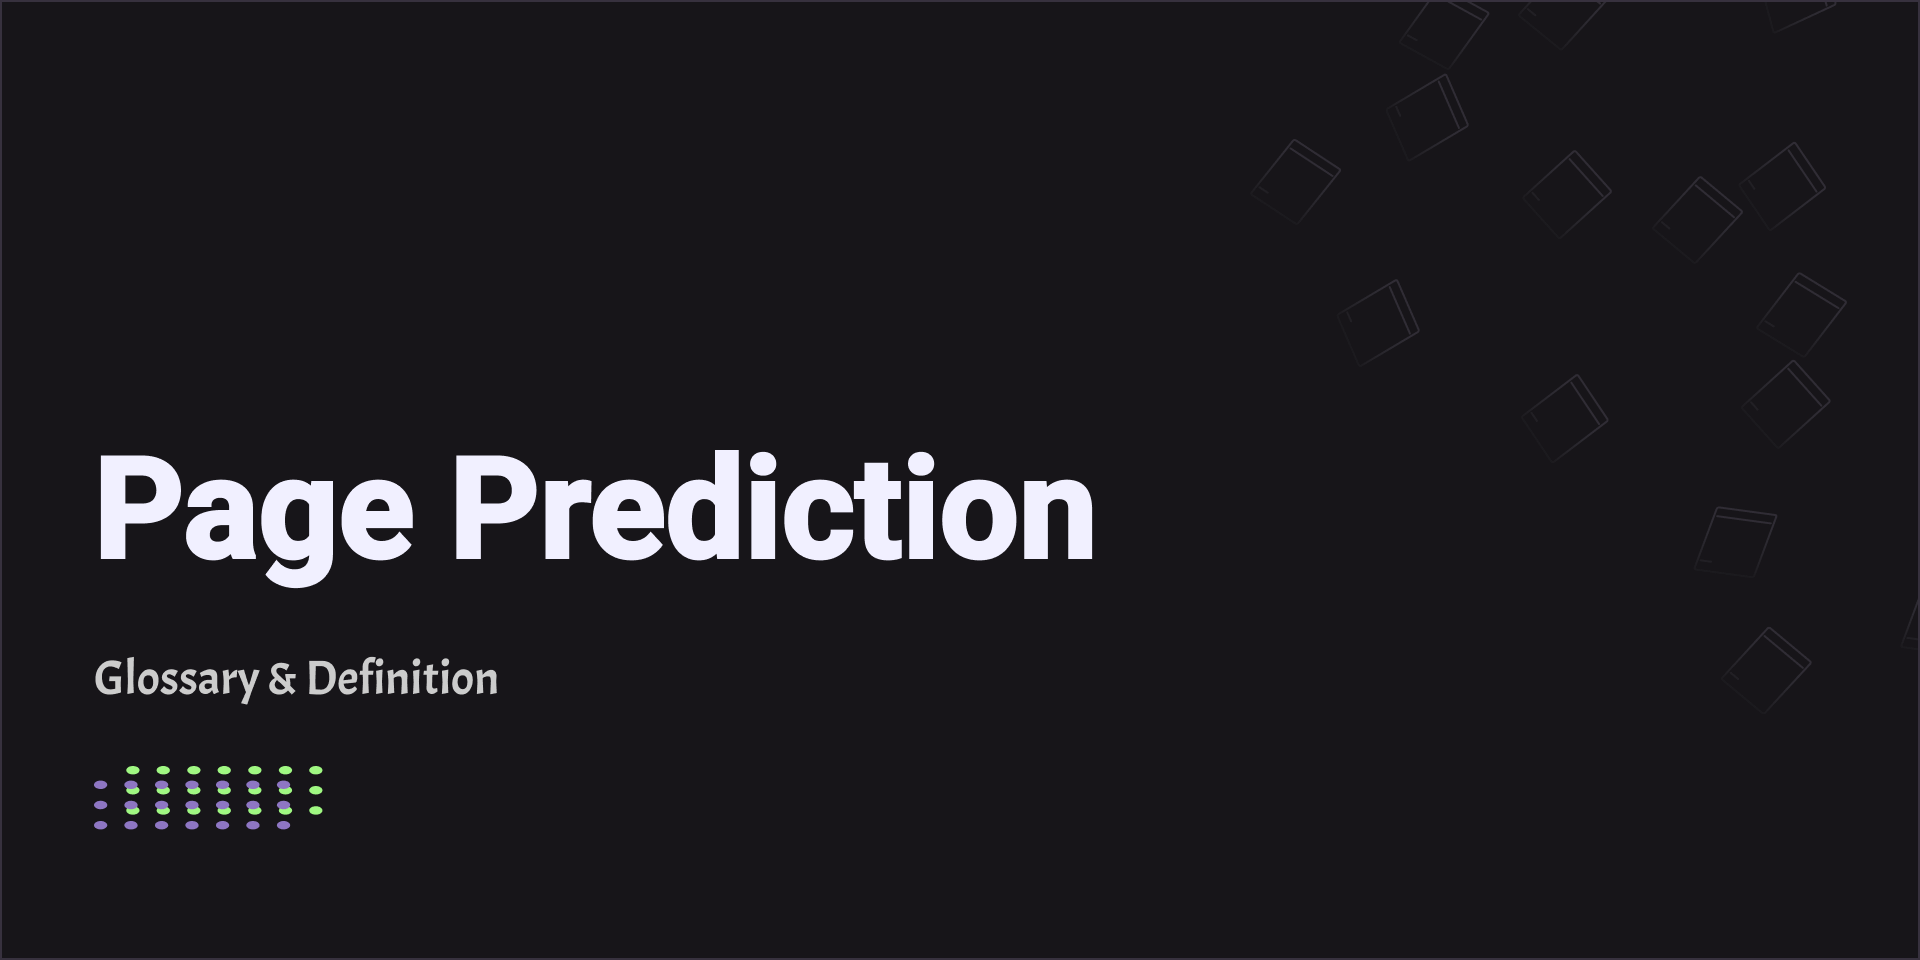 Page Prediction